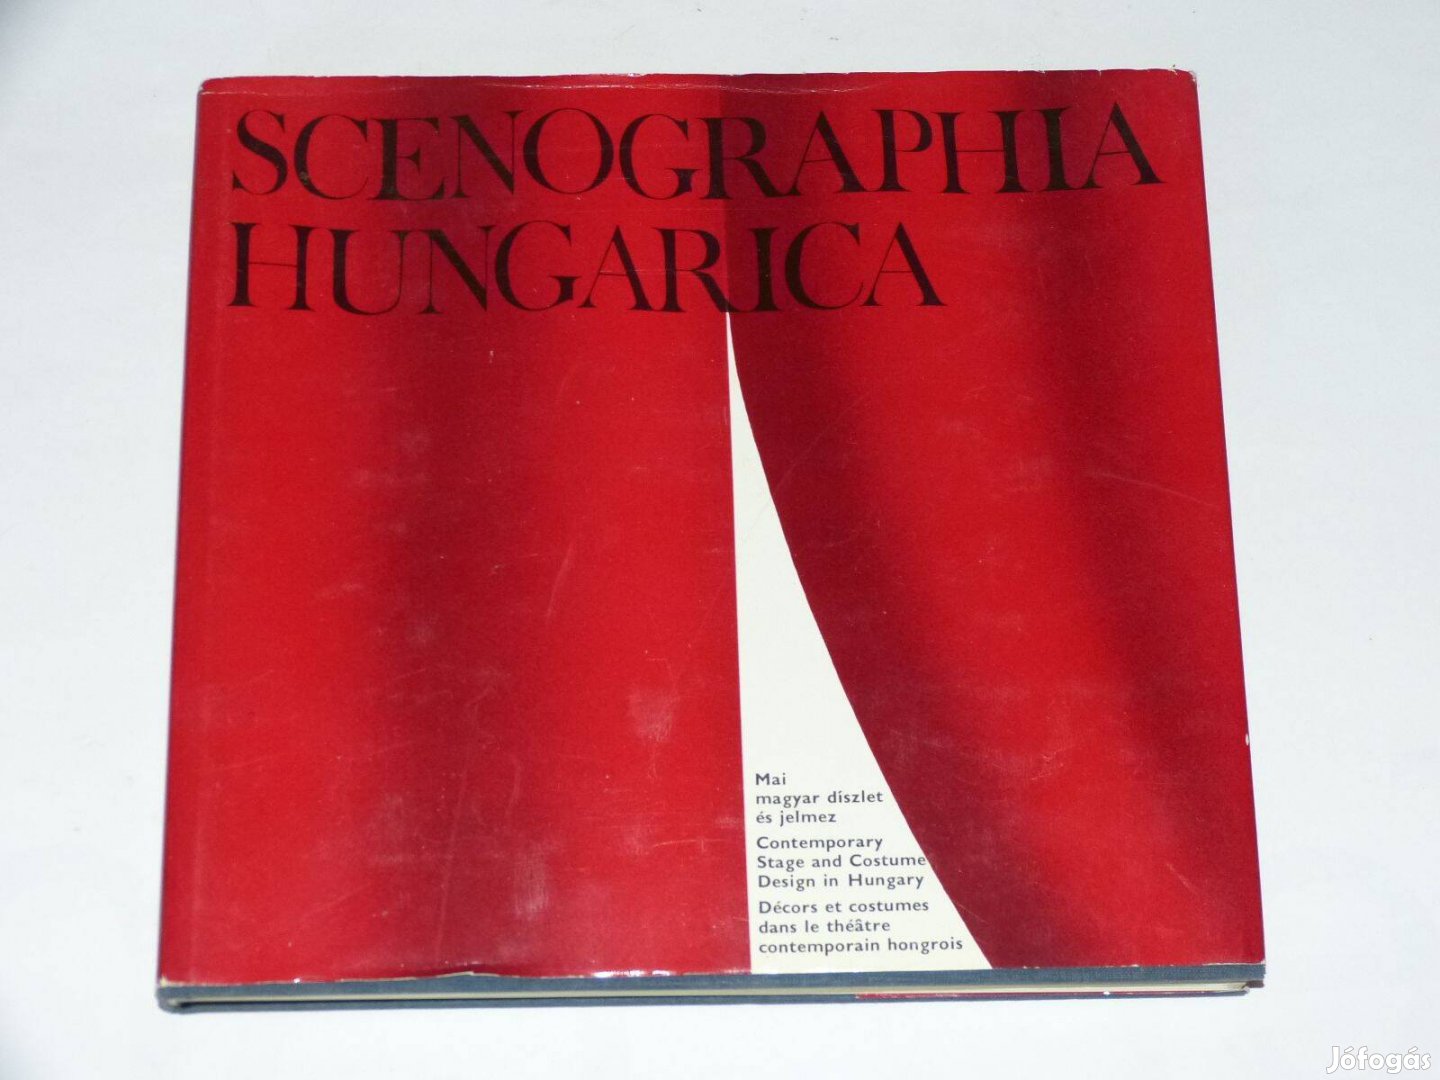 Bőgel József Jánosa Lajos Scenographia Hungarica / könyv